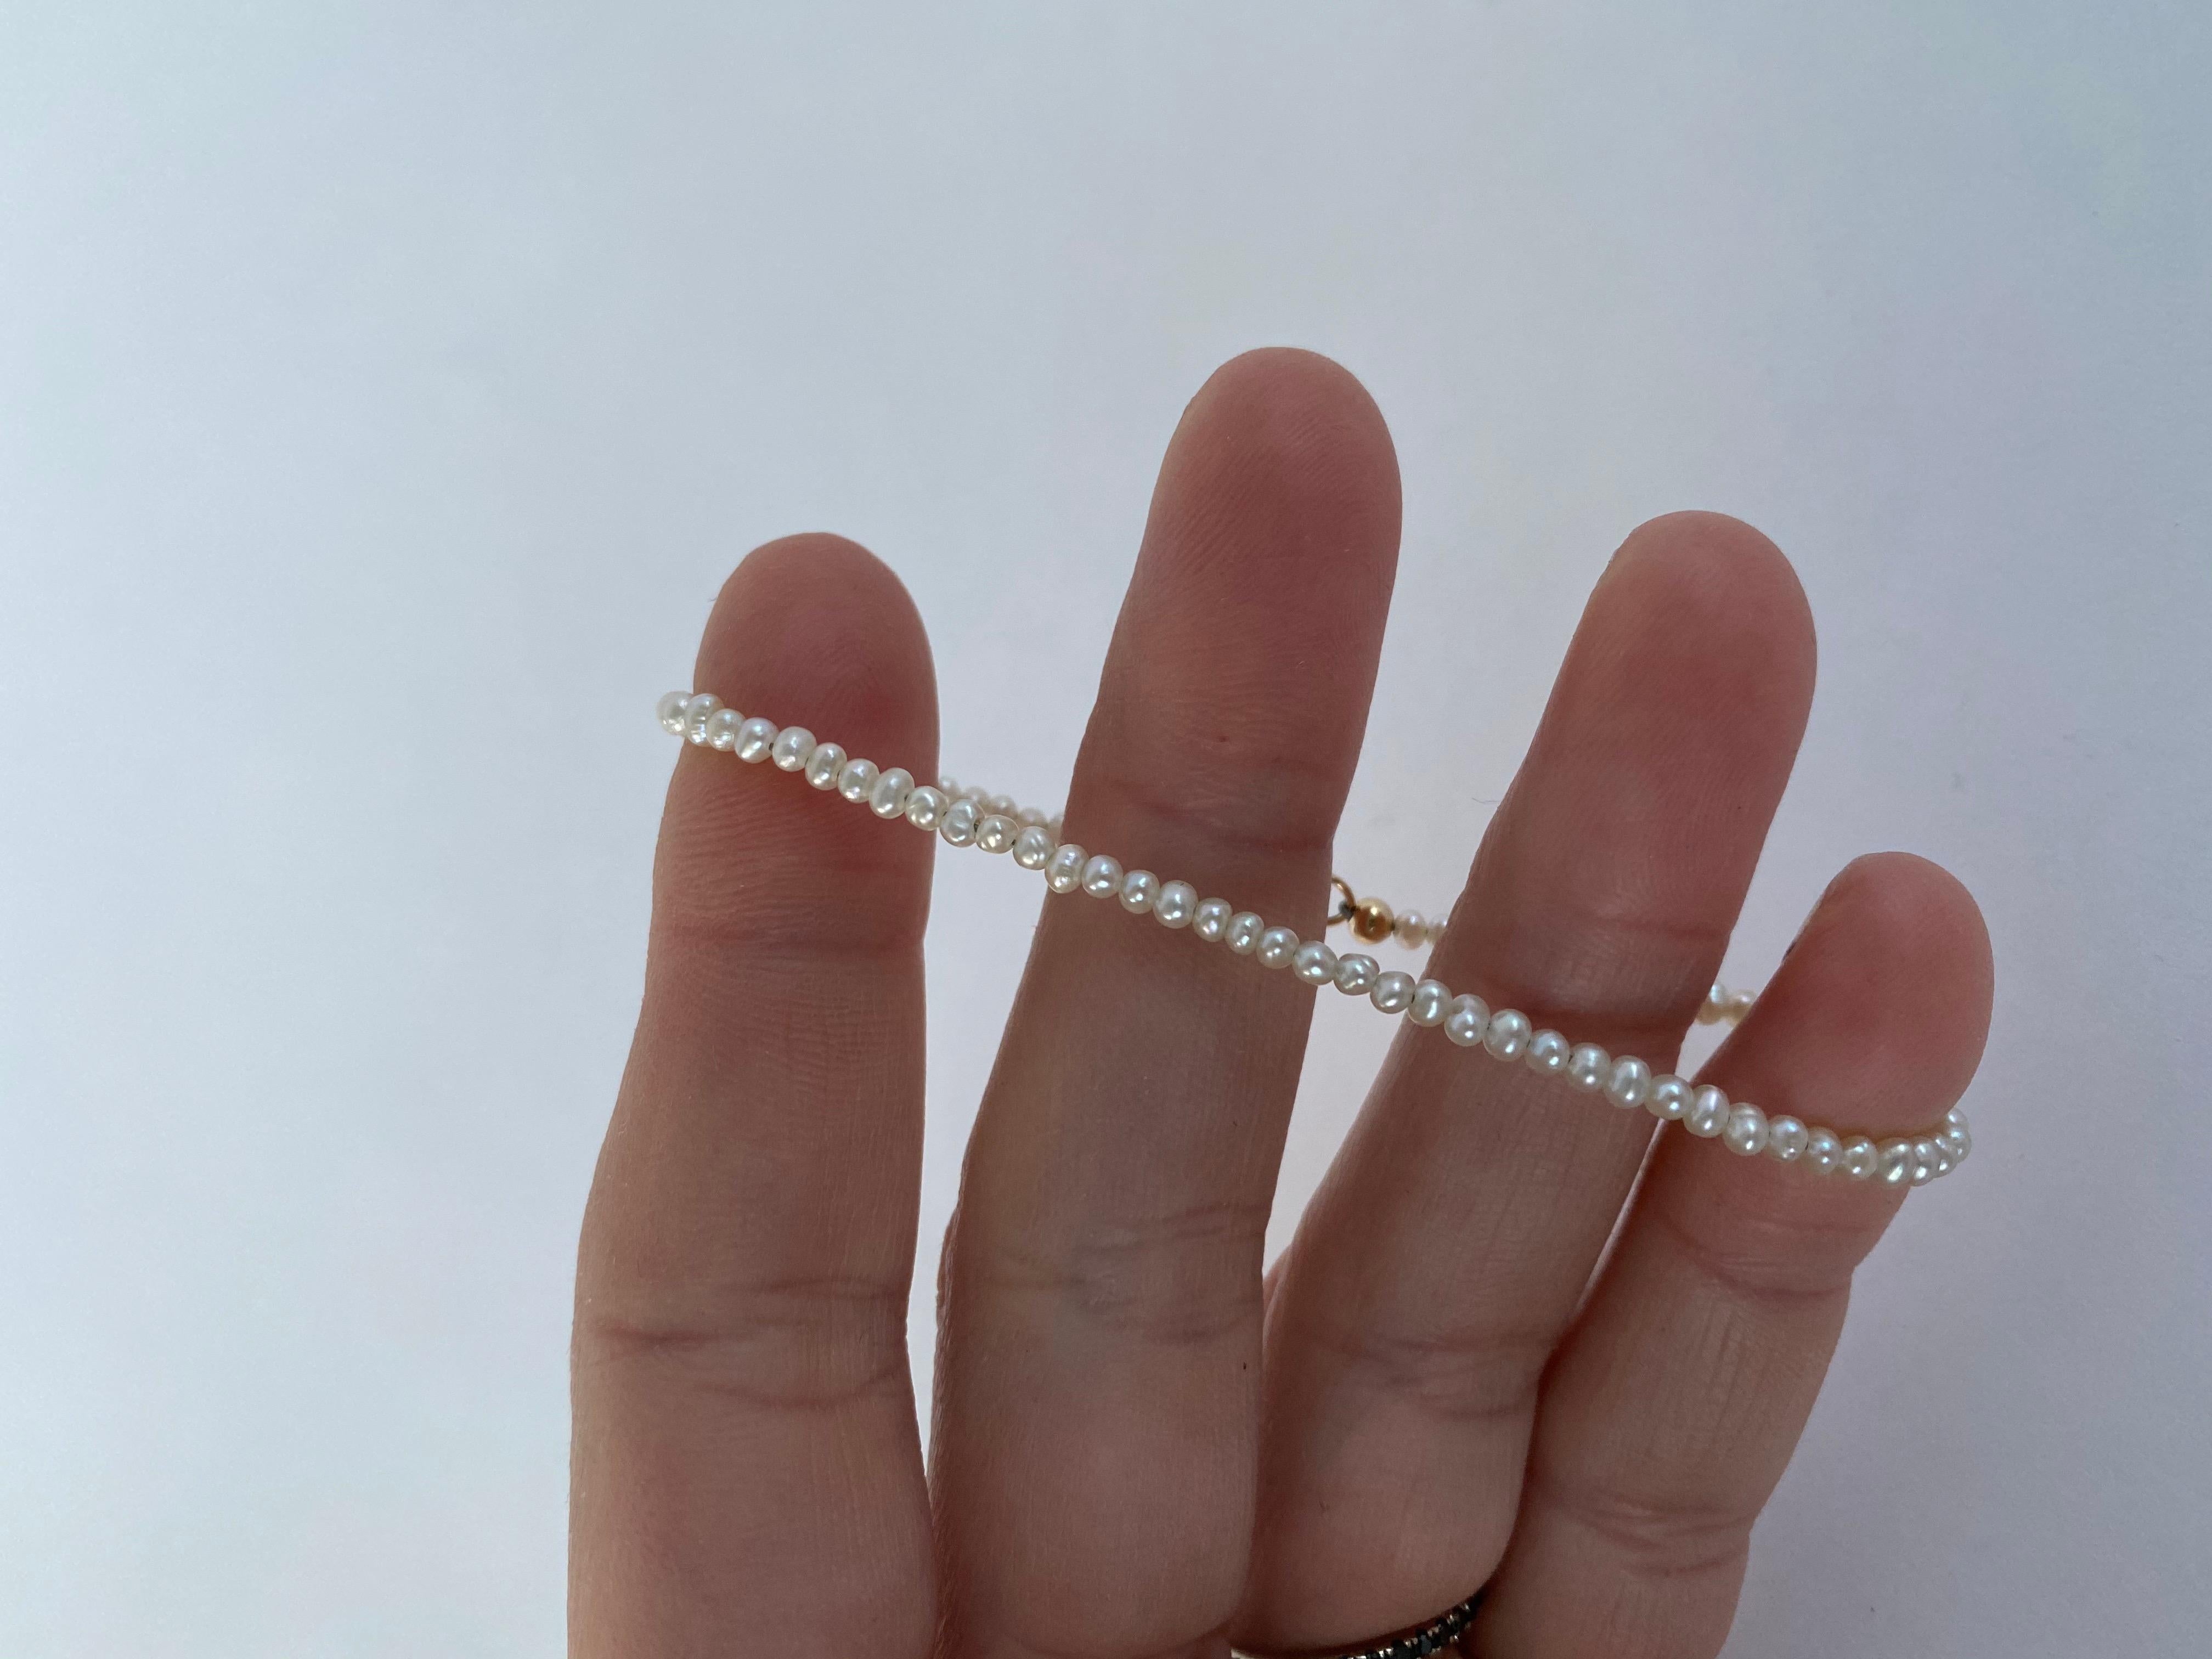 Romantic White Pearl Beaded Bracelet J Dauphin For Sale